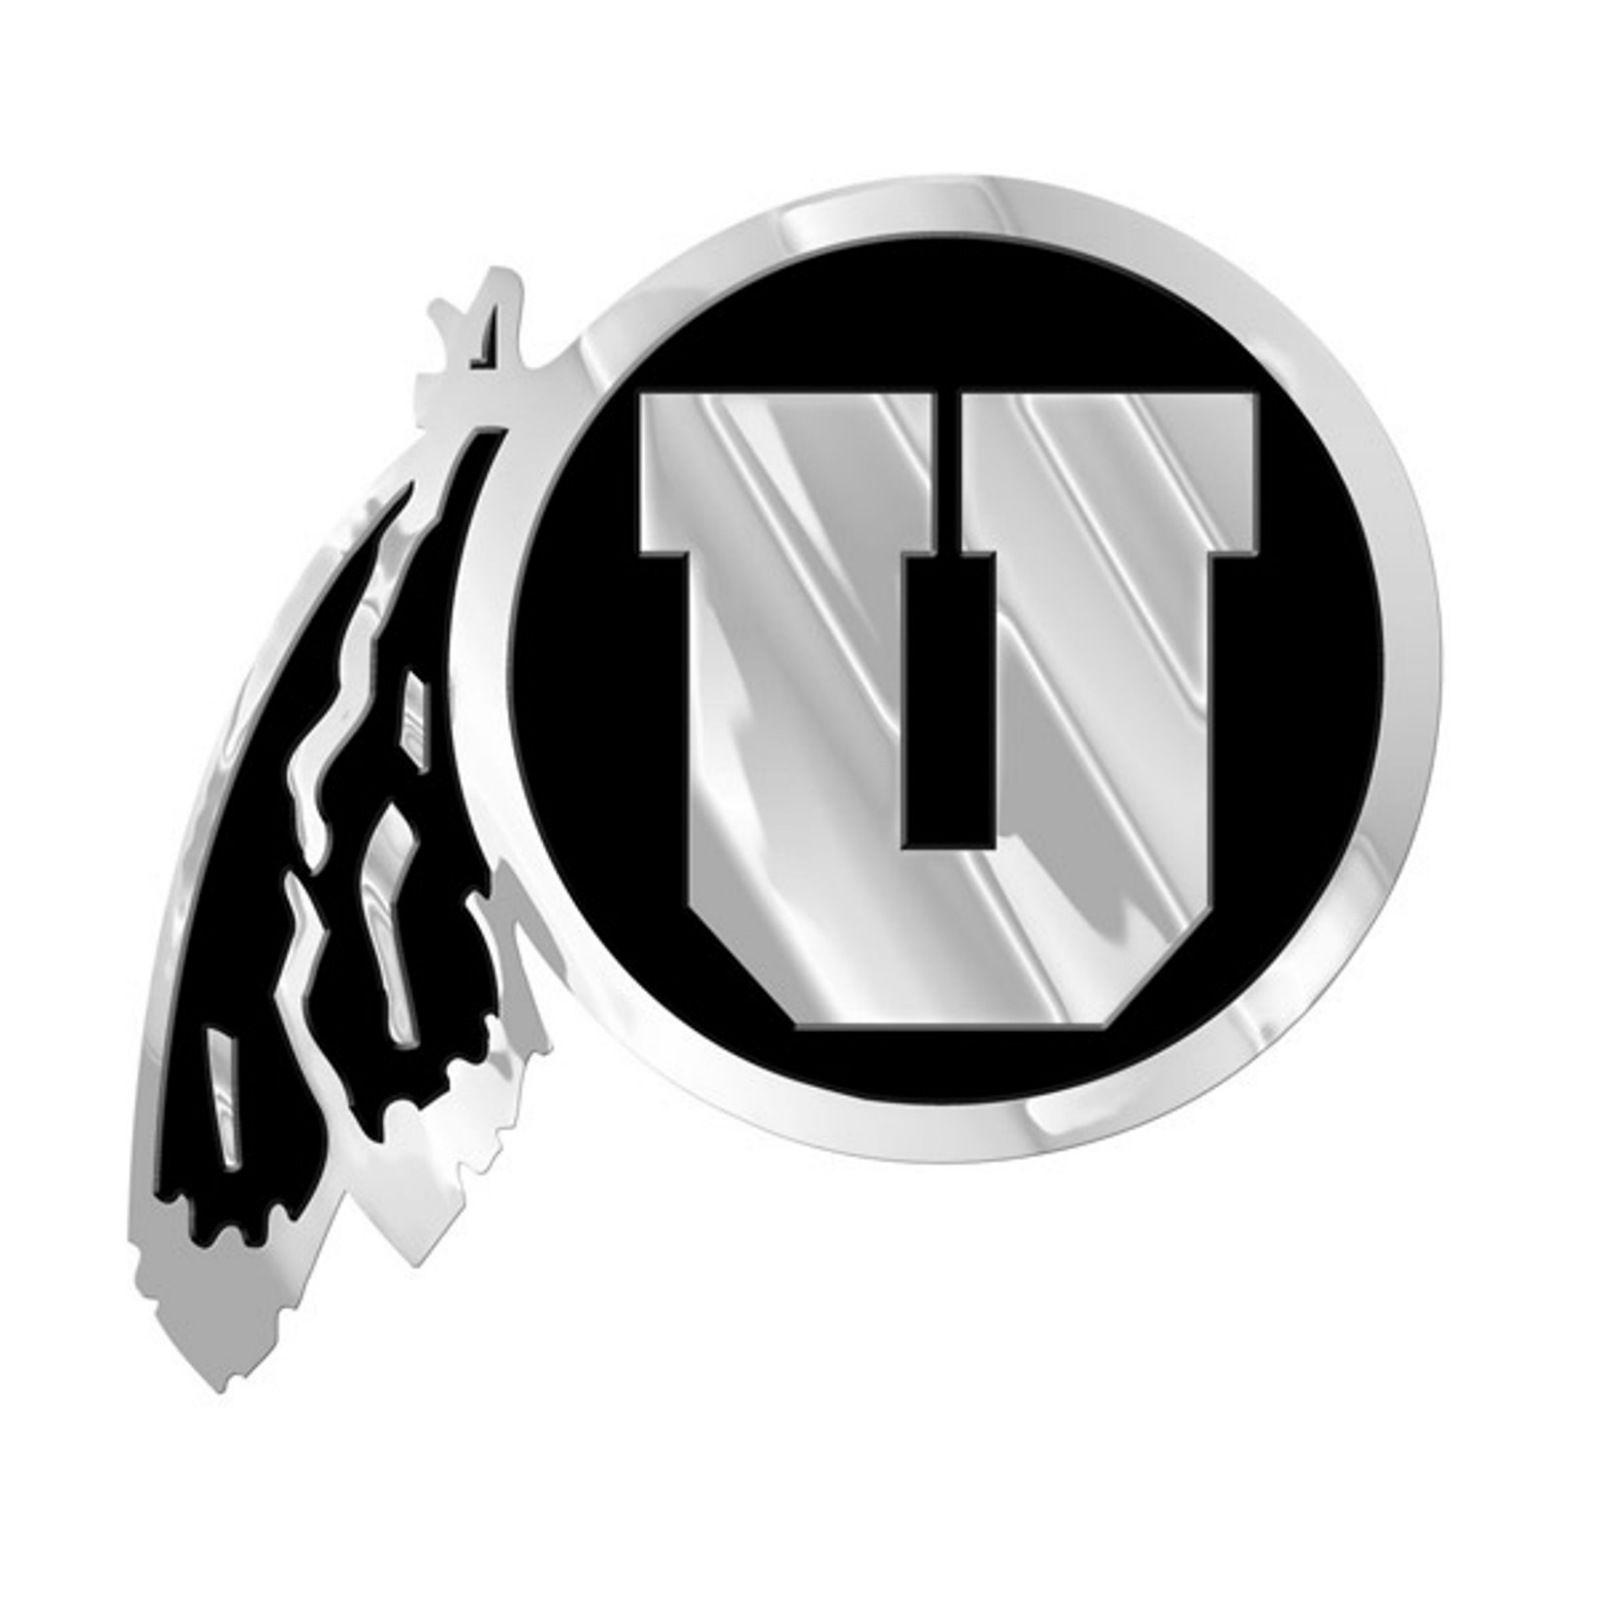 University of Utah Football Logo - Utah Utes Silver Chrome Colored Raised Die Cut Auto Emblem Decal ...